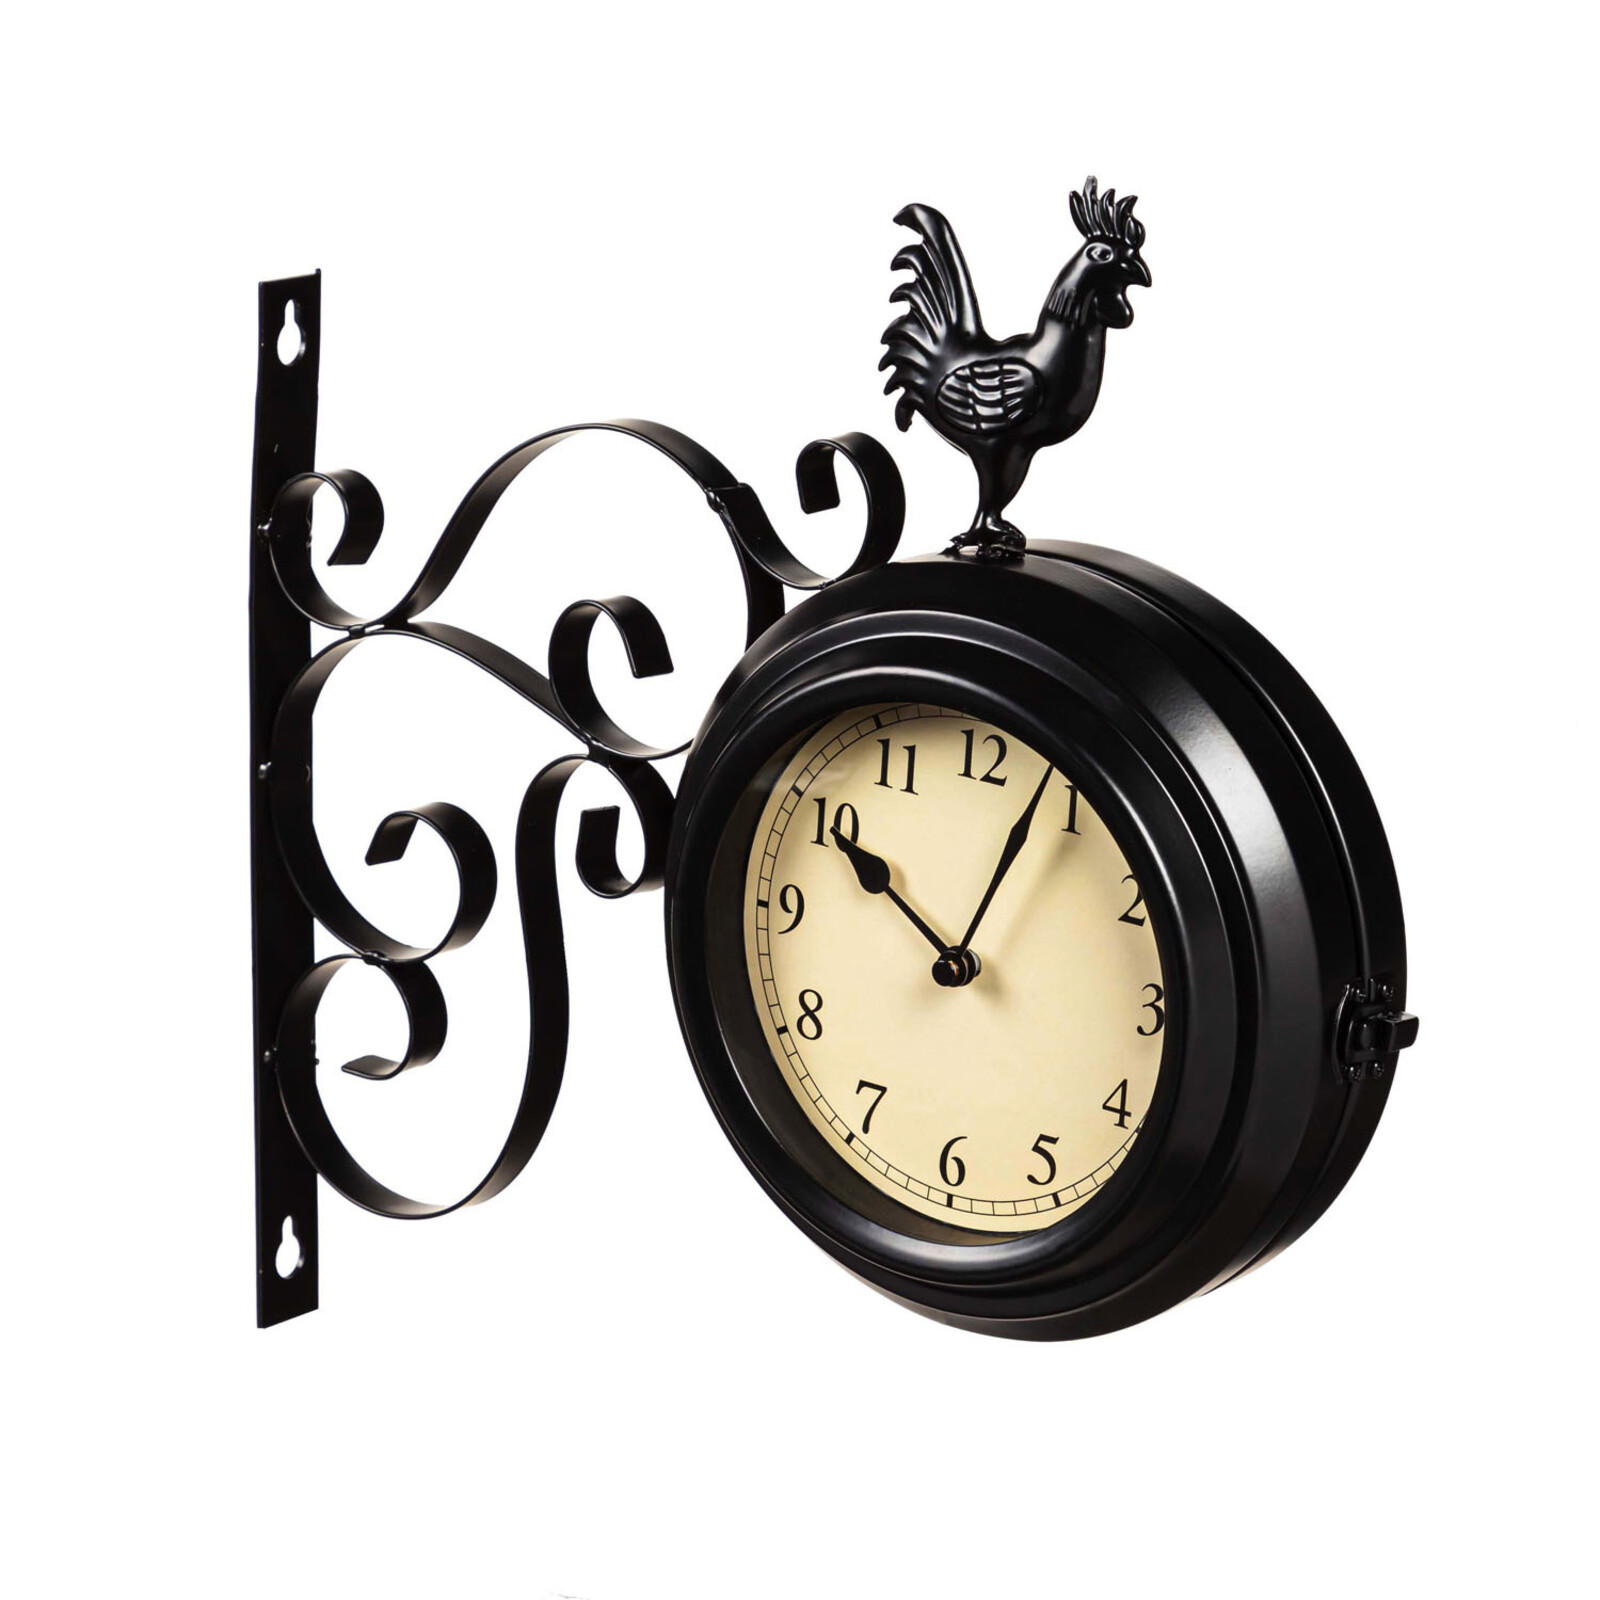 Evergreen Enterprises Metal Rooster Outdoor Clock  6CL159 loading=